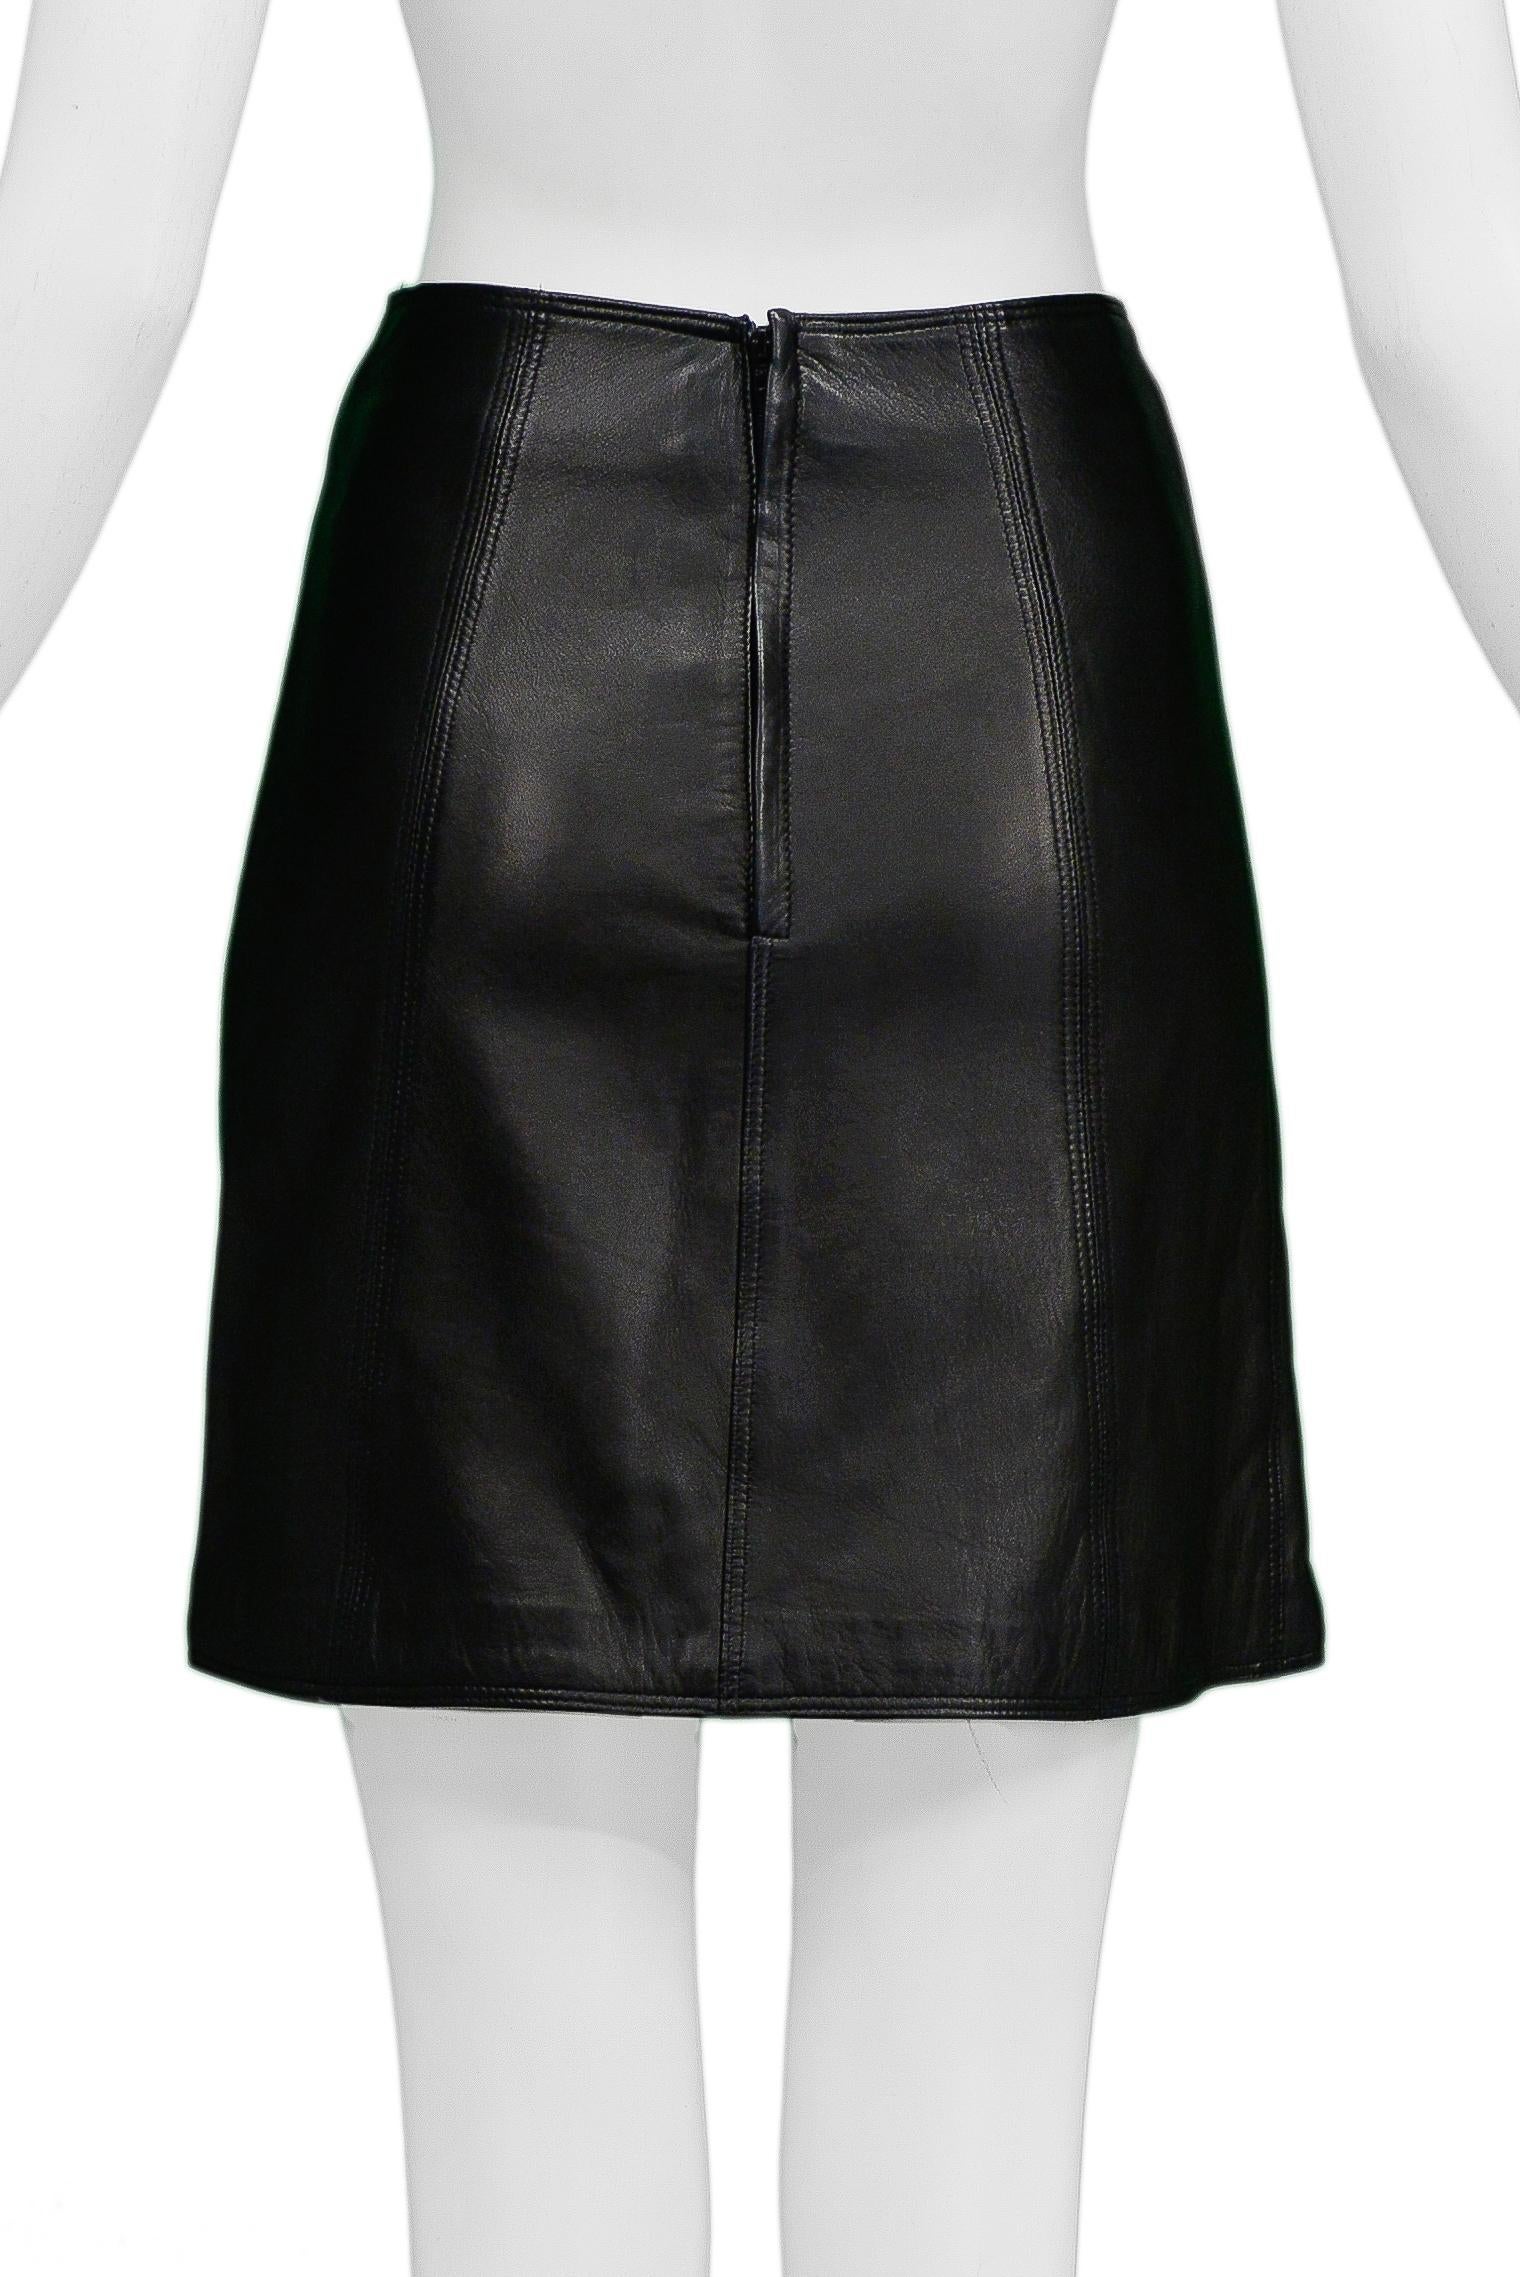 Versace Black Leather Mini Skirt For Sale 1